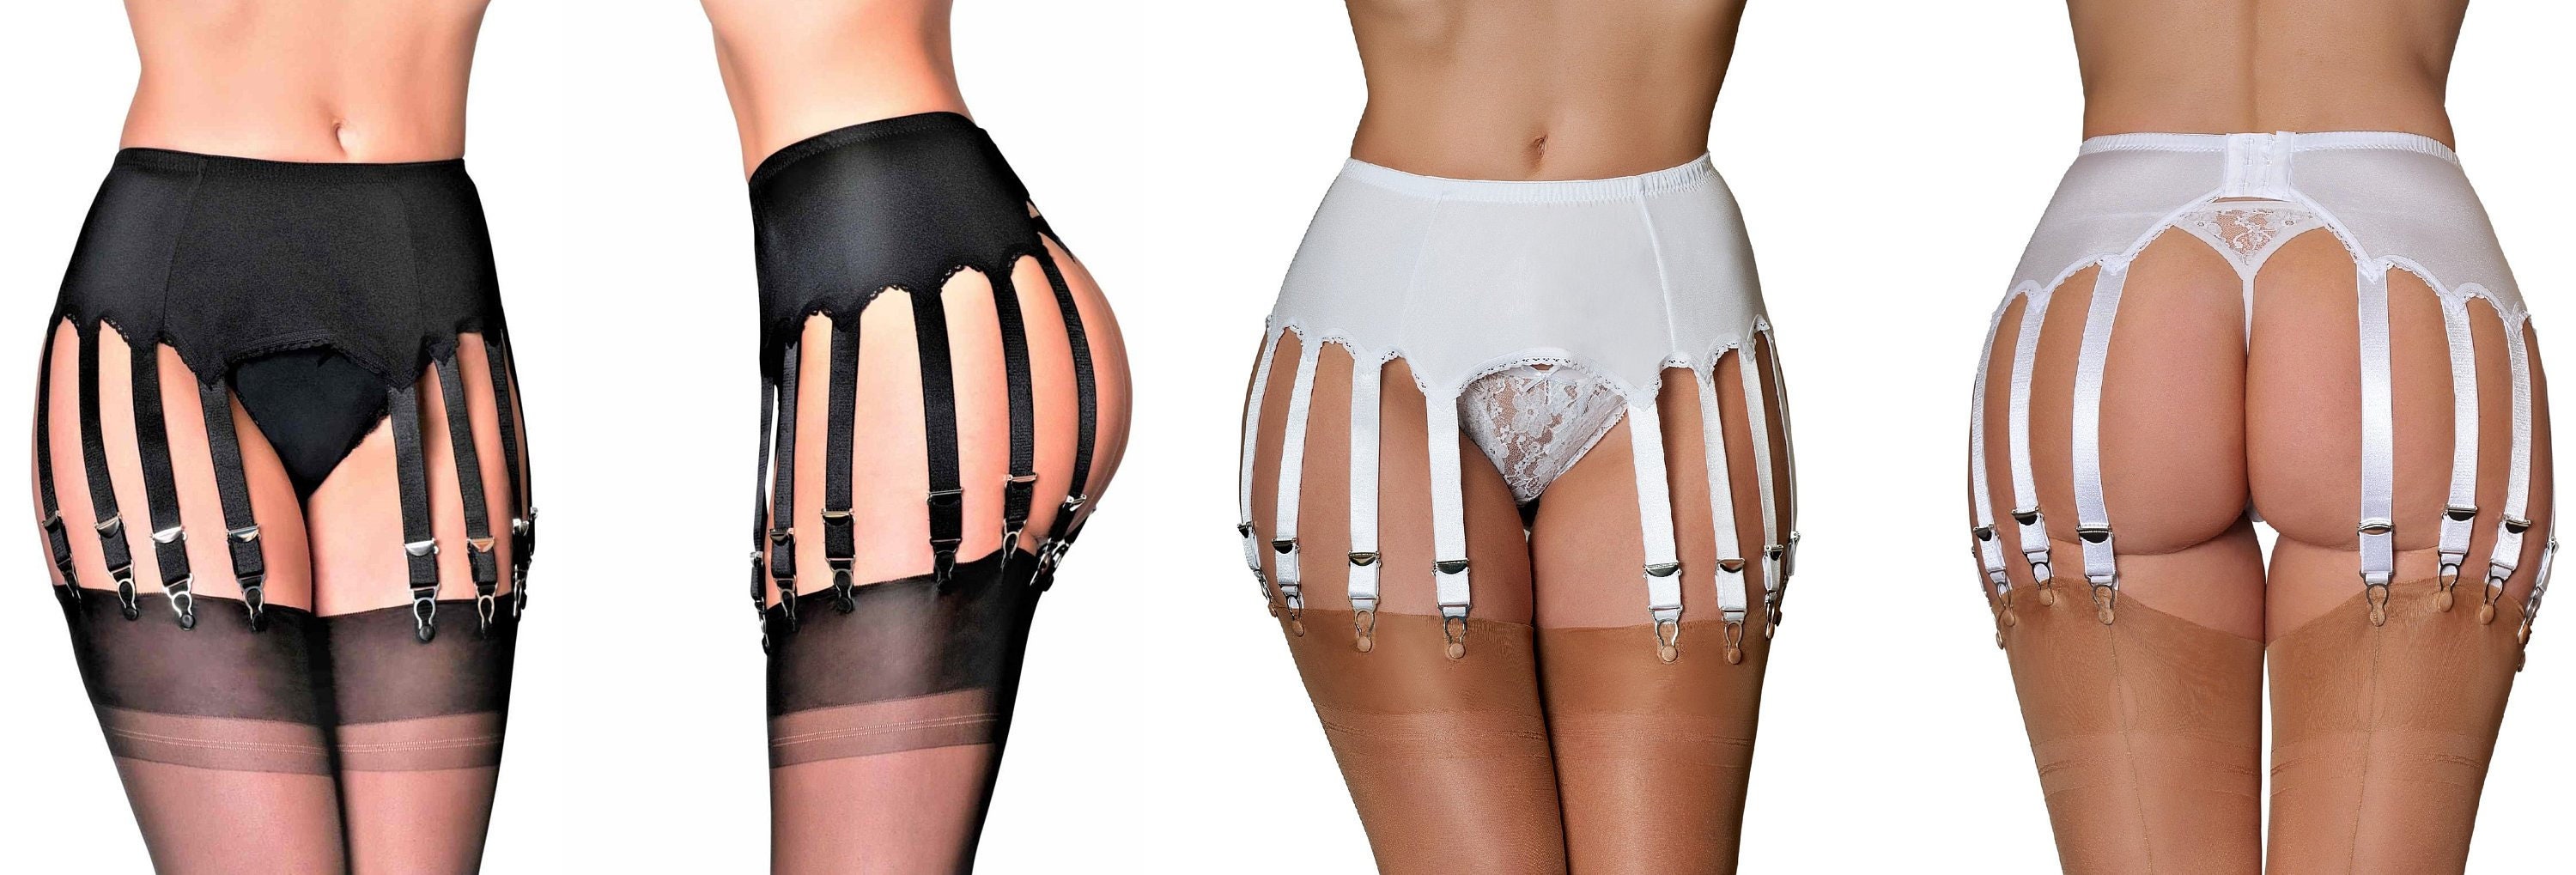 Women's Suspender Belts & Garters with Lace